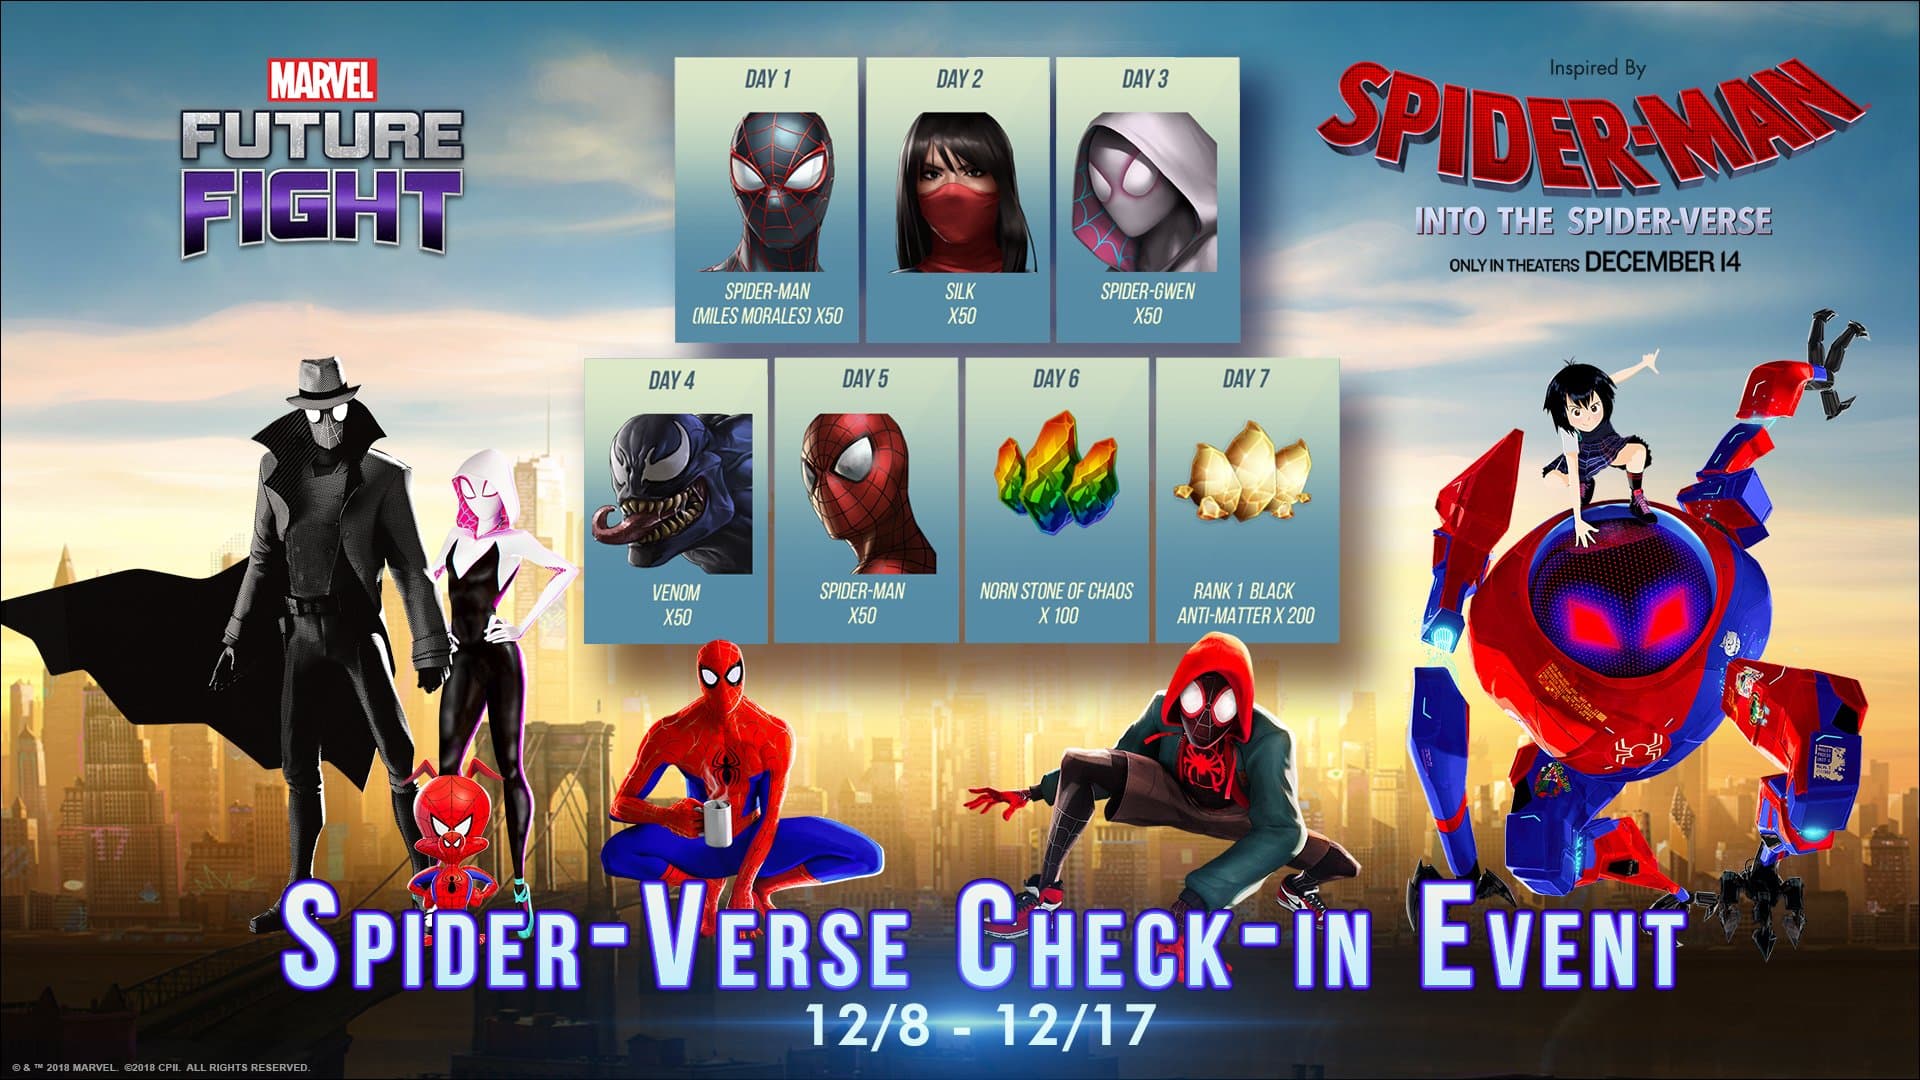 Marvel Future Fight - Spider-Man: Into the Spider-Verse